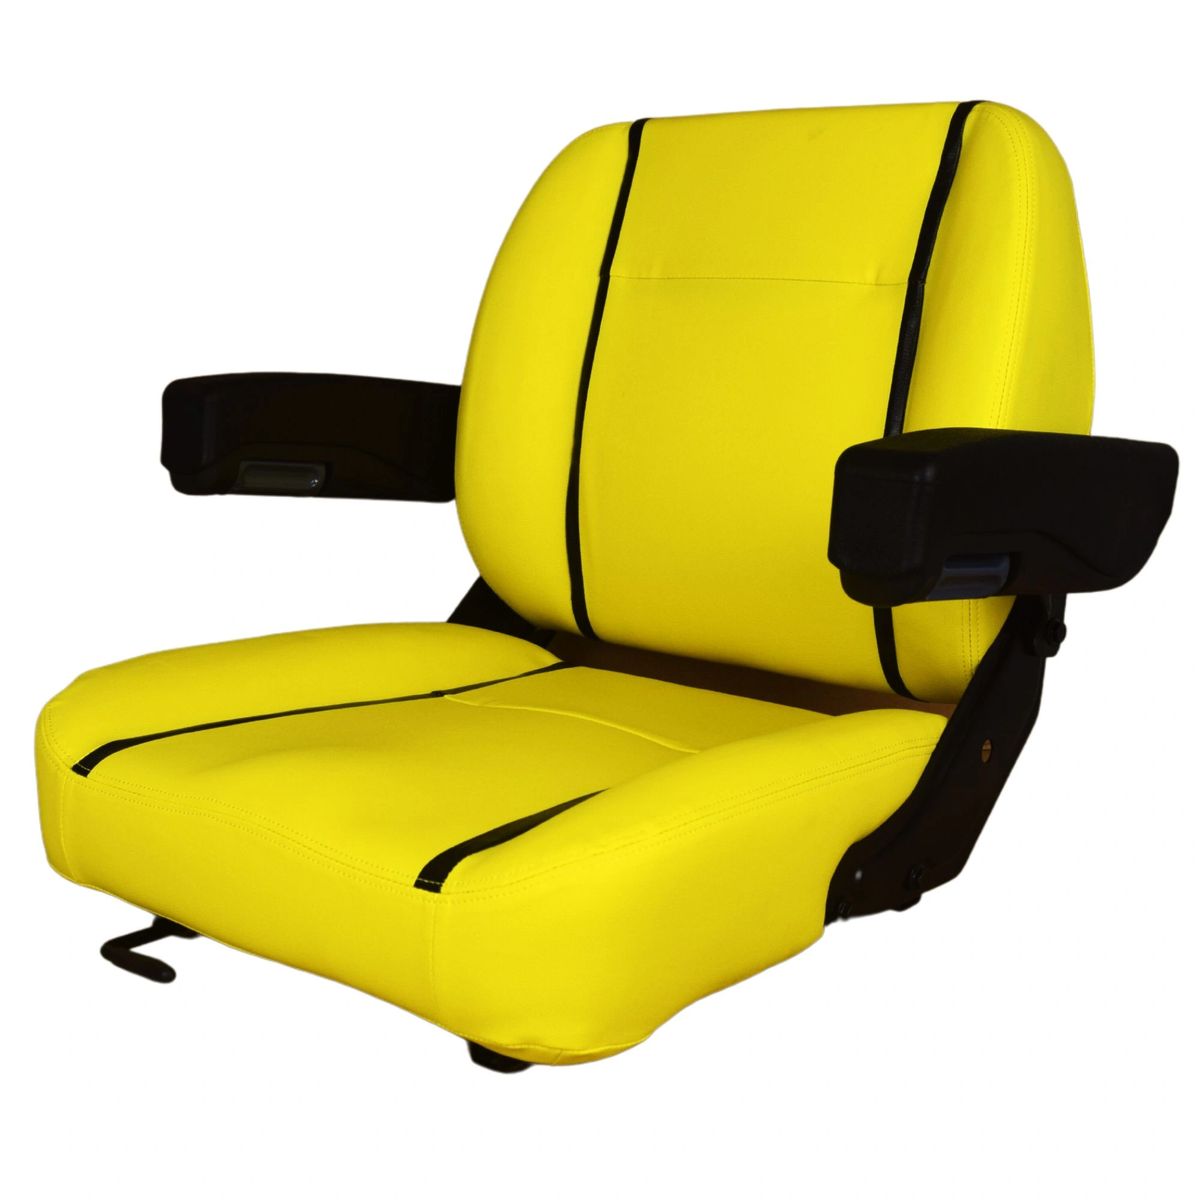 Trac Seats Yellow TS-Z10 Seat for John Deere Zero Turn Mower, Compact  Tractor, Construction Vehicles,